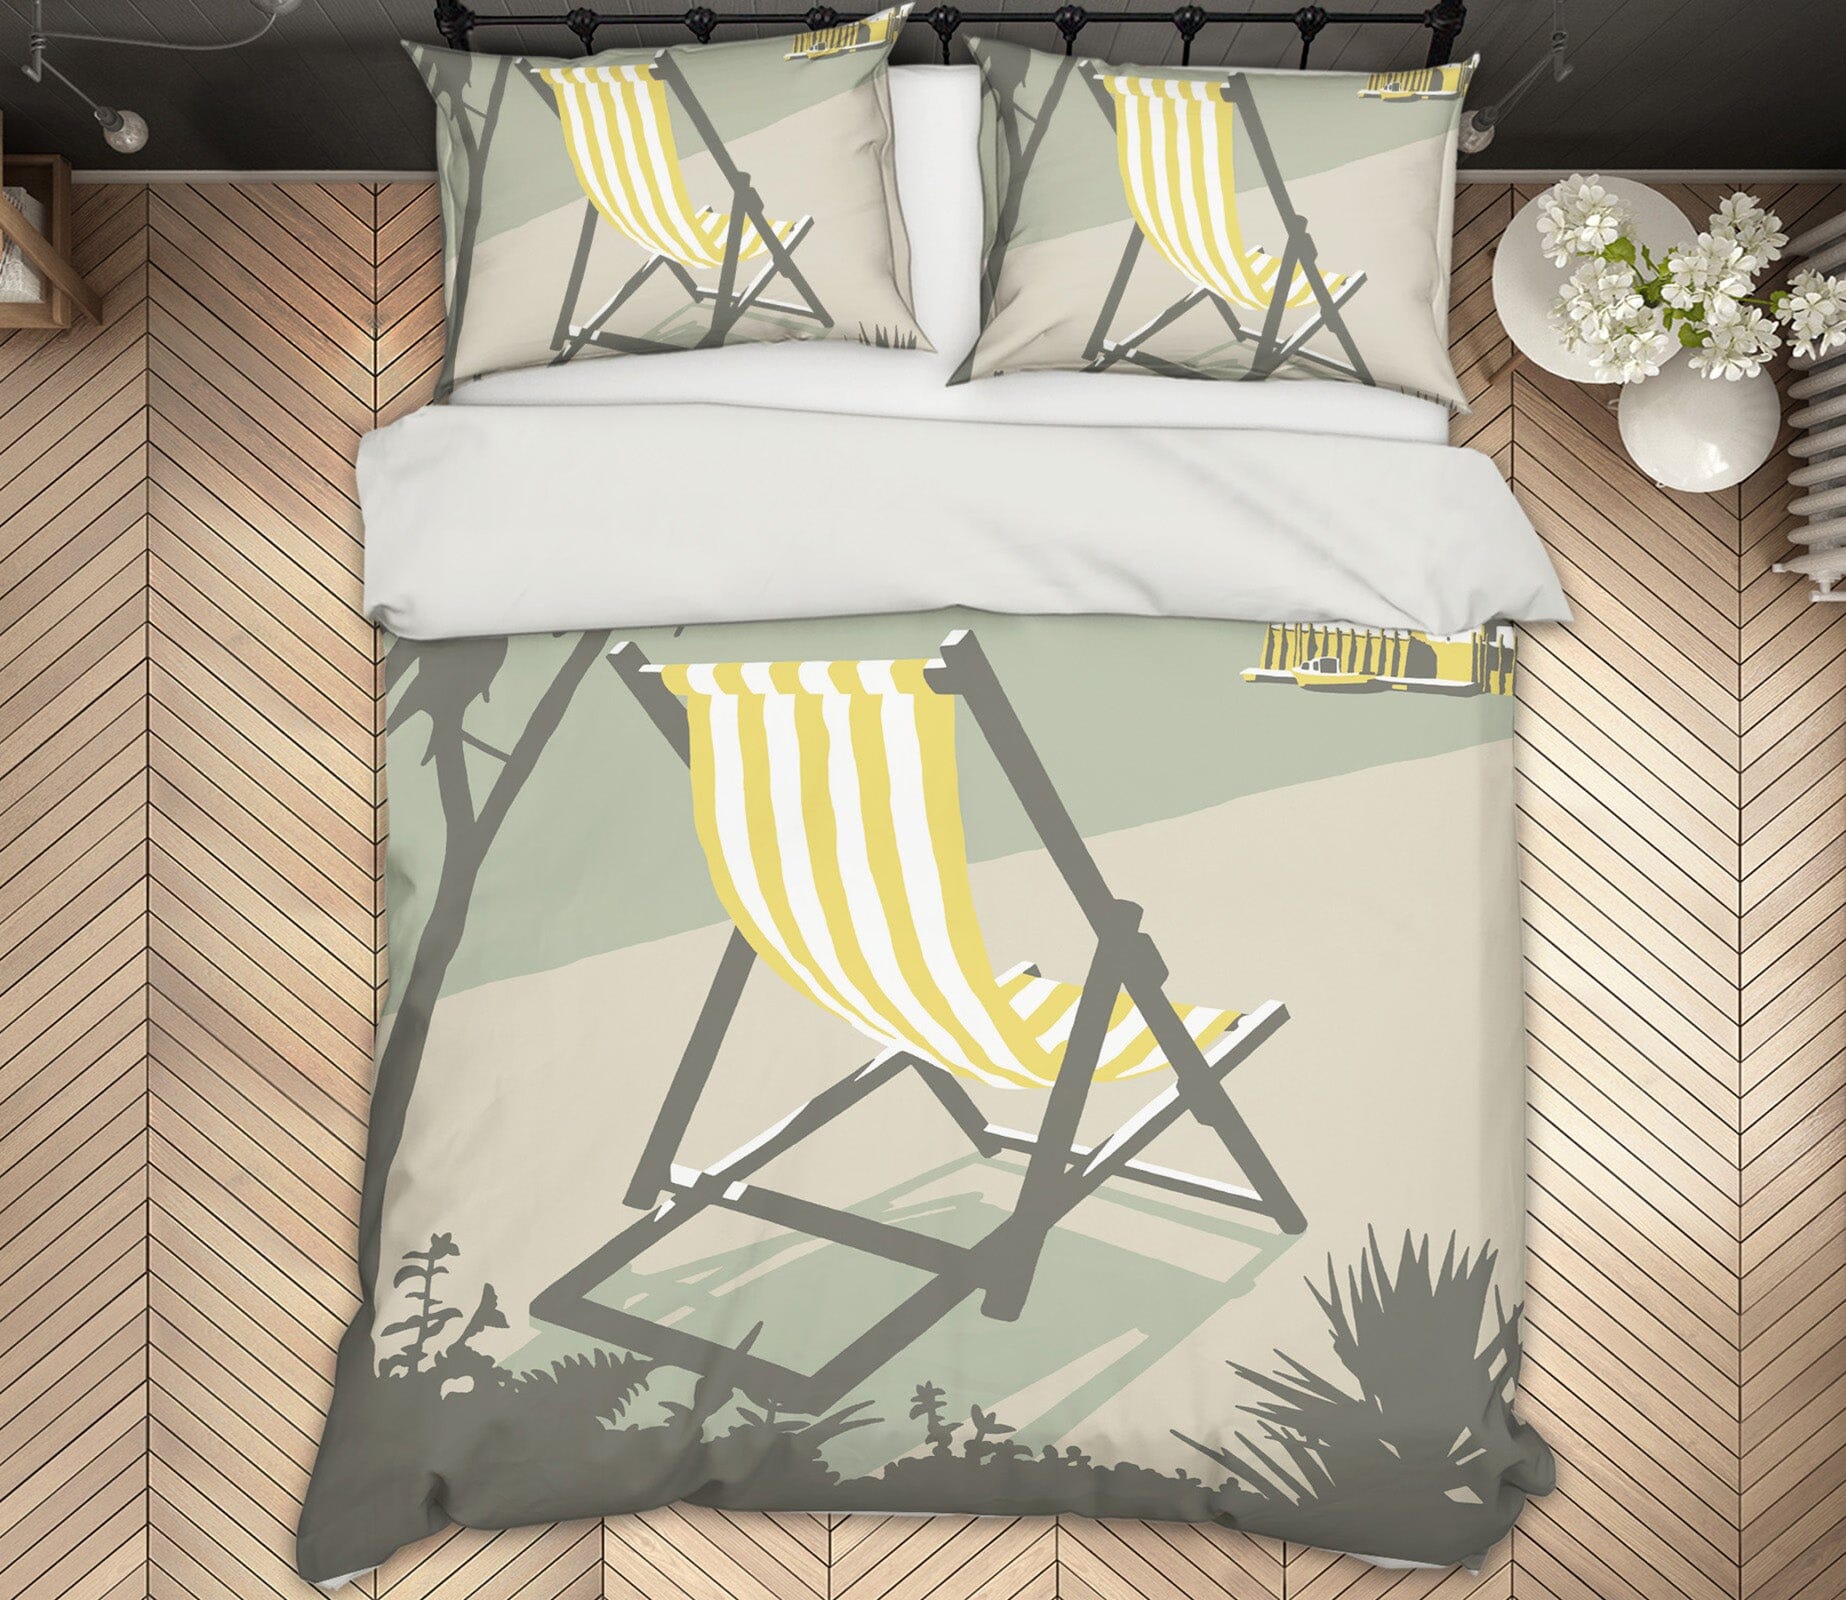 3D Rock Deckchair 2047 Steve Read Bedding Bed Pillowcases Quilt Quiet Covers AJ Creativity Home 